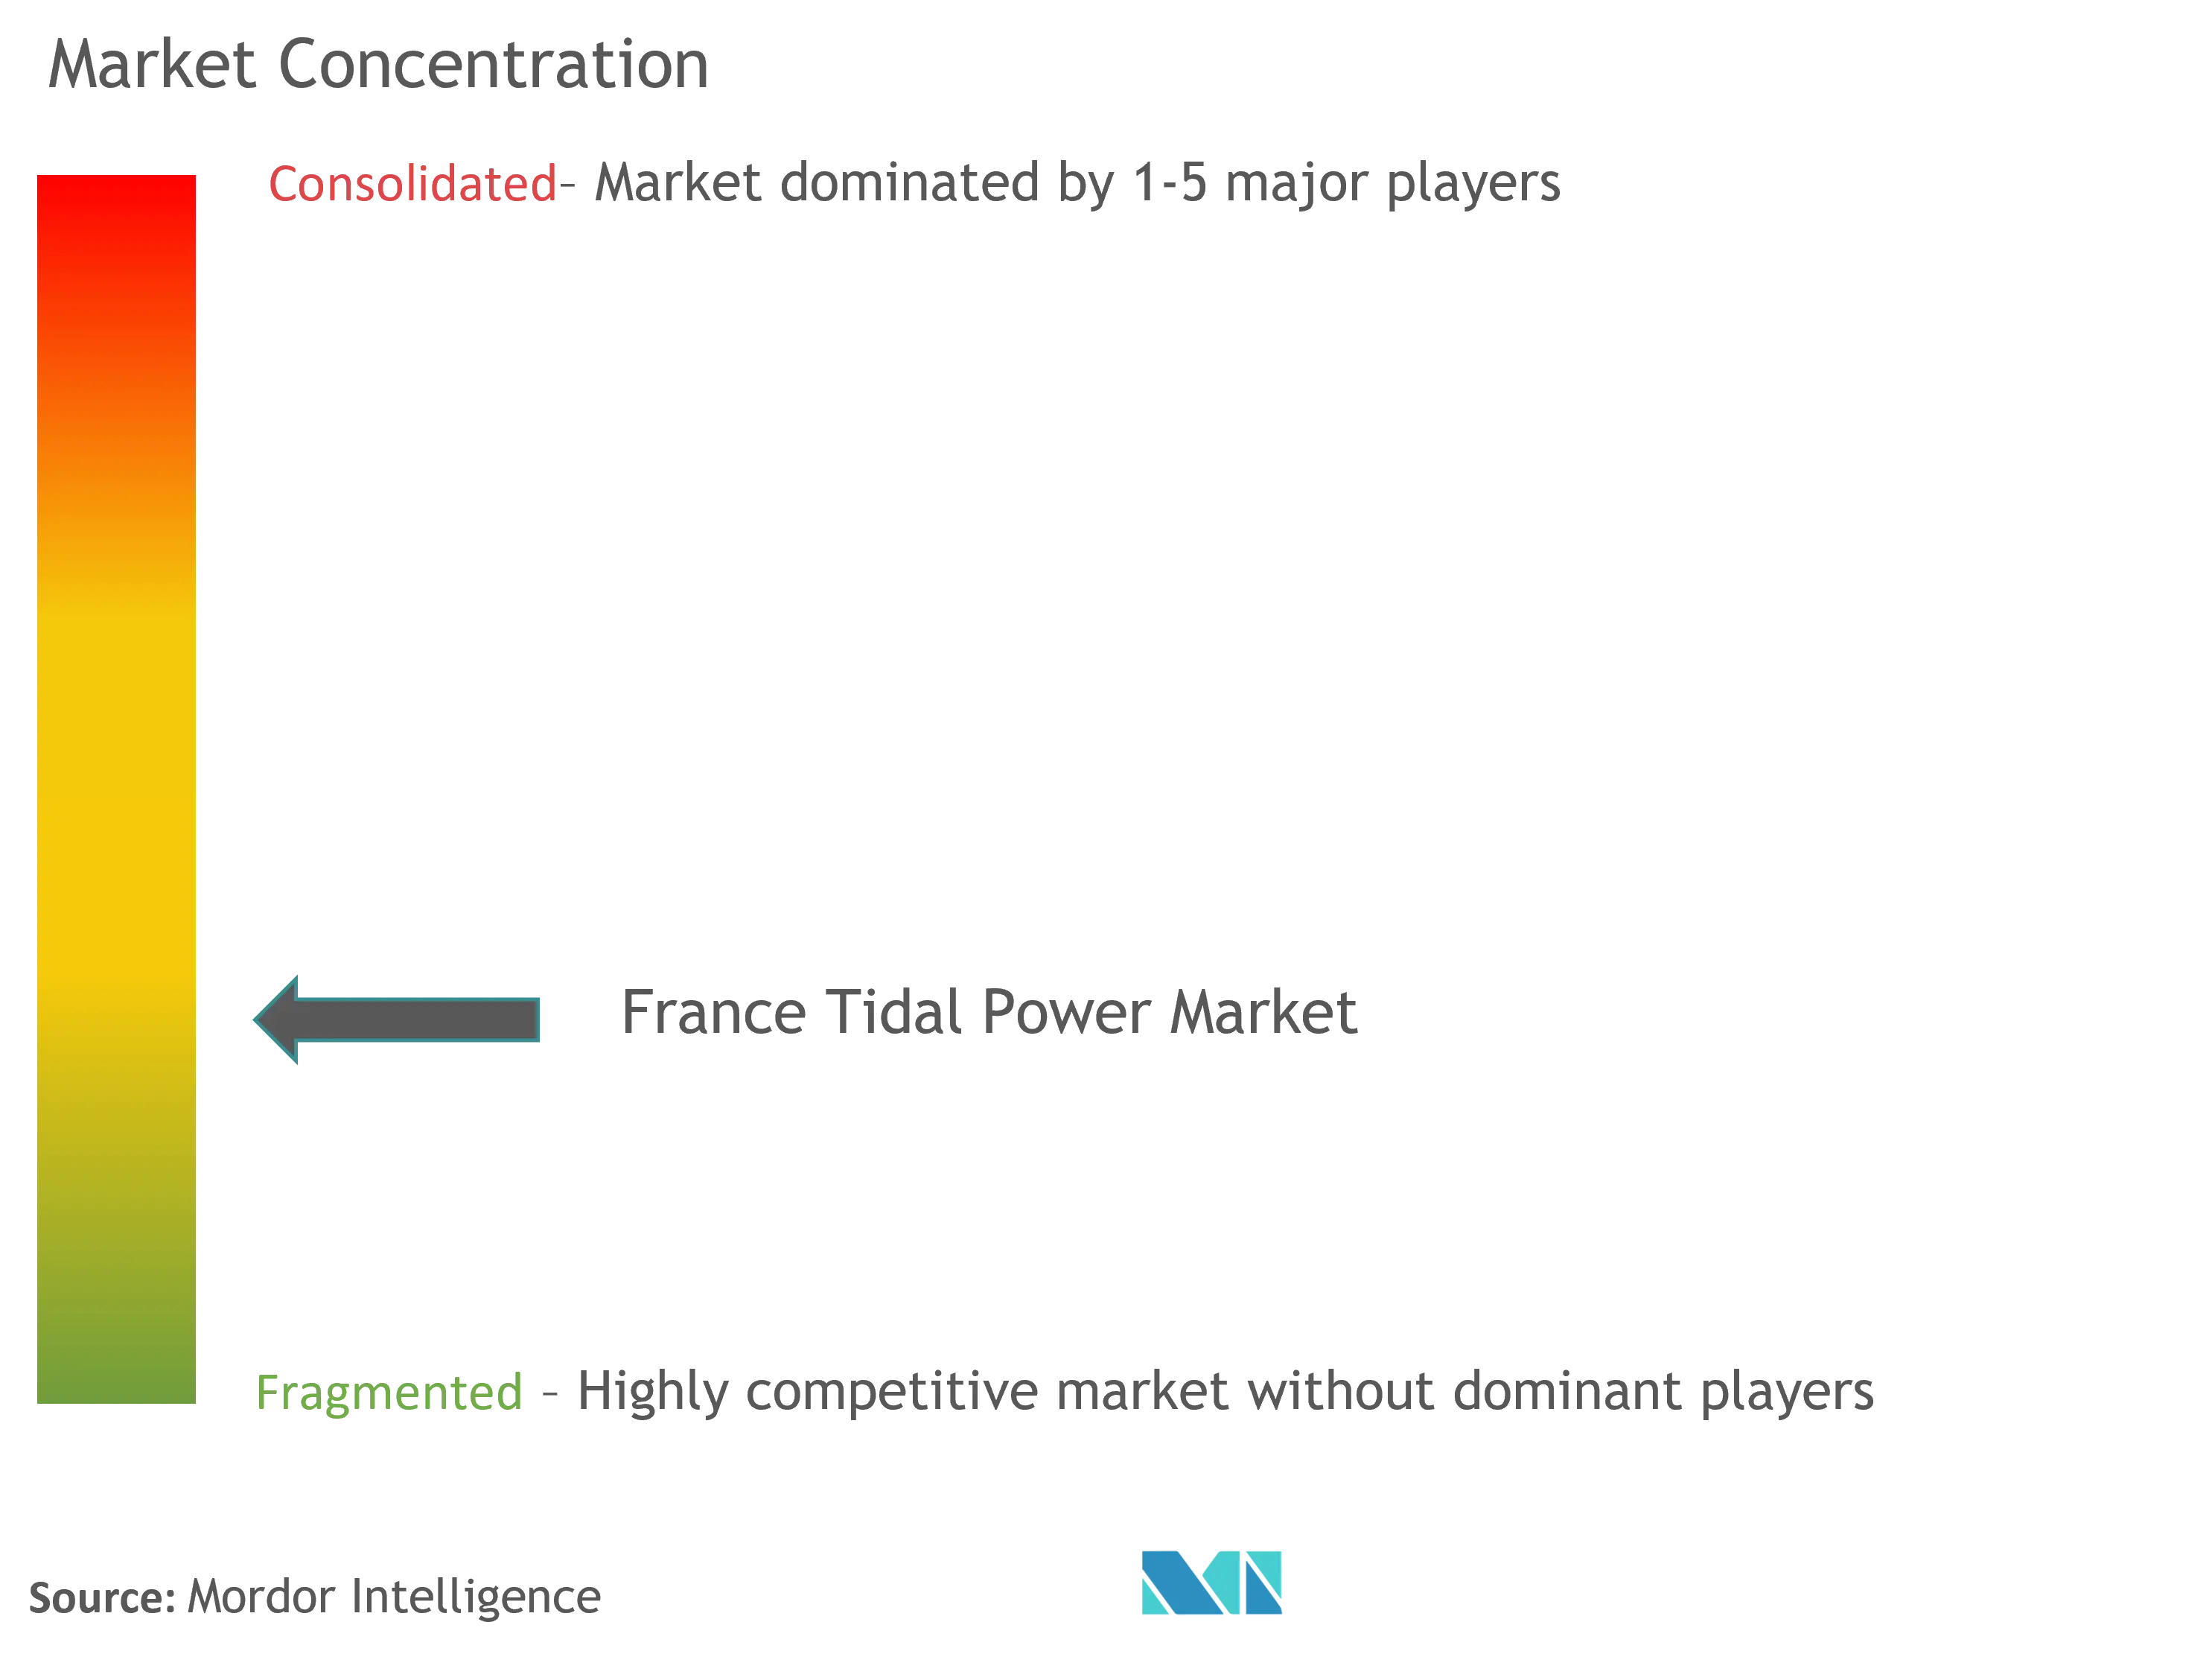 France Tidal Power Market Concentration